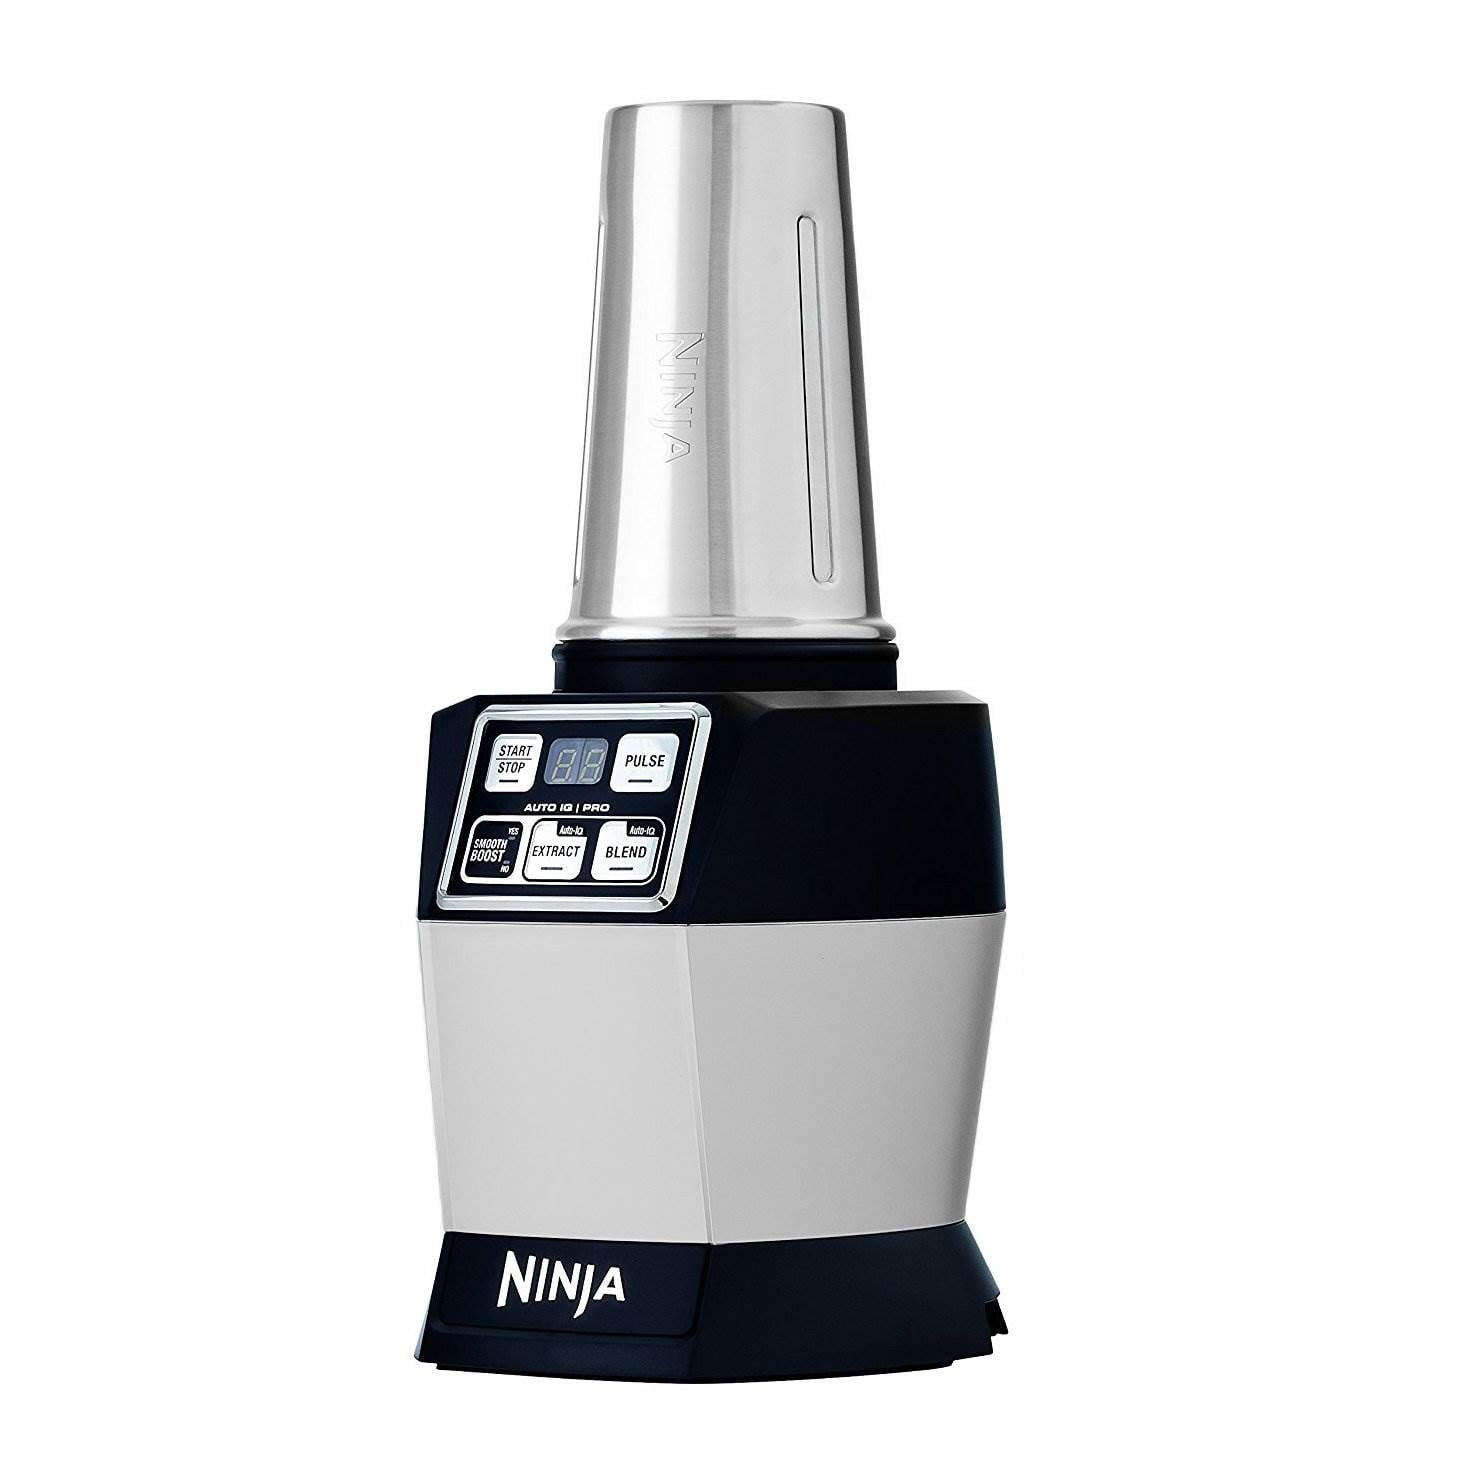 Reviews for NINJA Nutri Blender Pro Silver 24 oz. with 2 Speed Auto iQ,  1100 Peak Watt, Personal Blender (BN401)